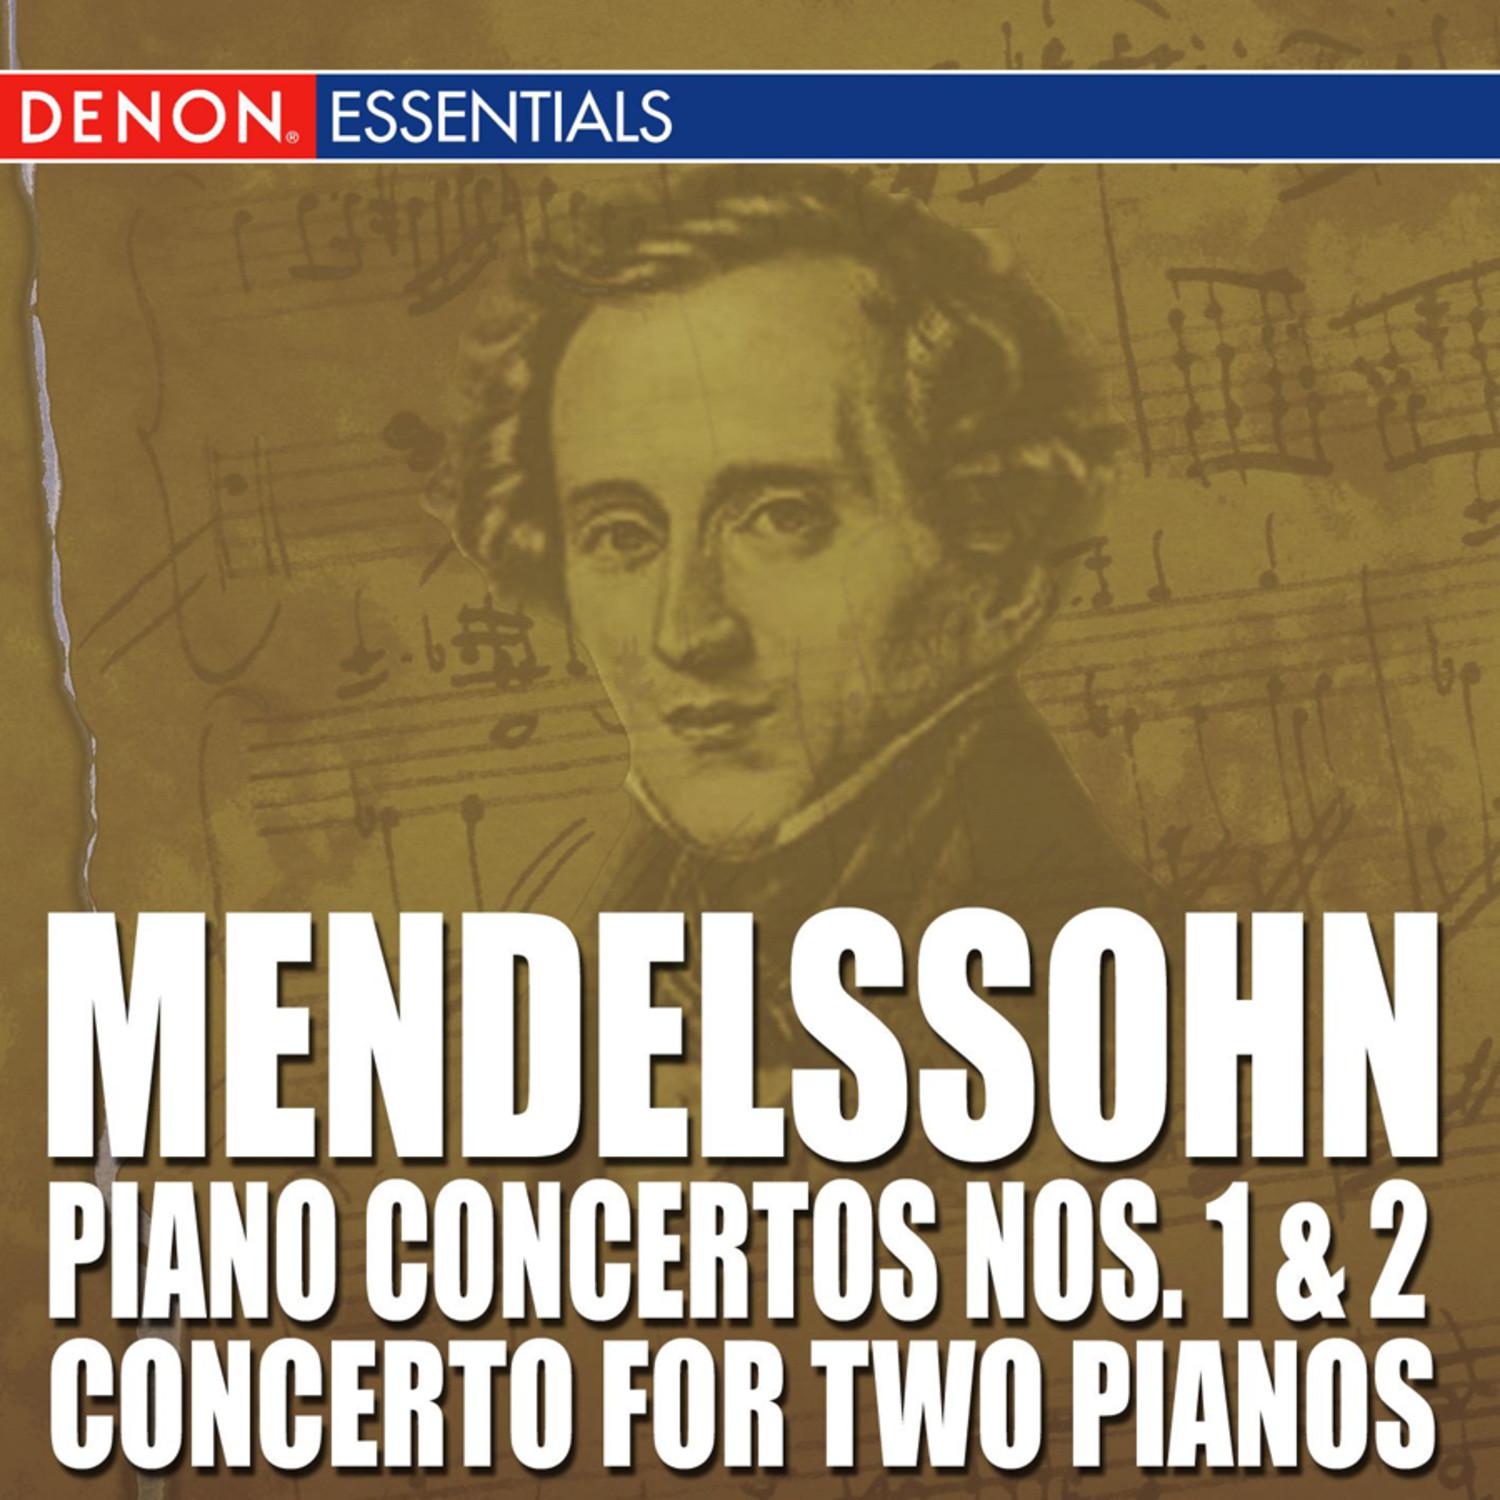 Mendelssohn: Piano Concertos Nos. 1 & 2 - Concerto for Two Pianos